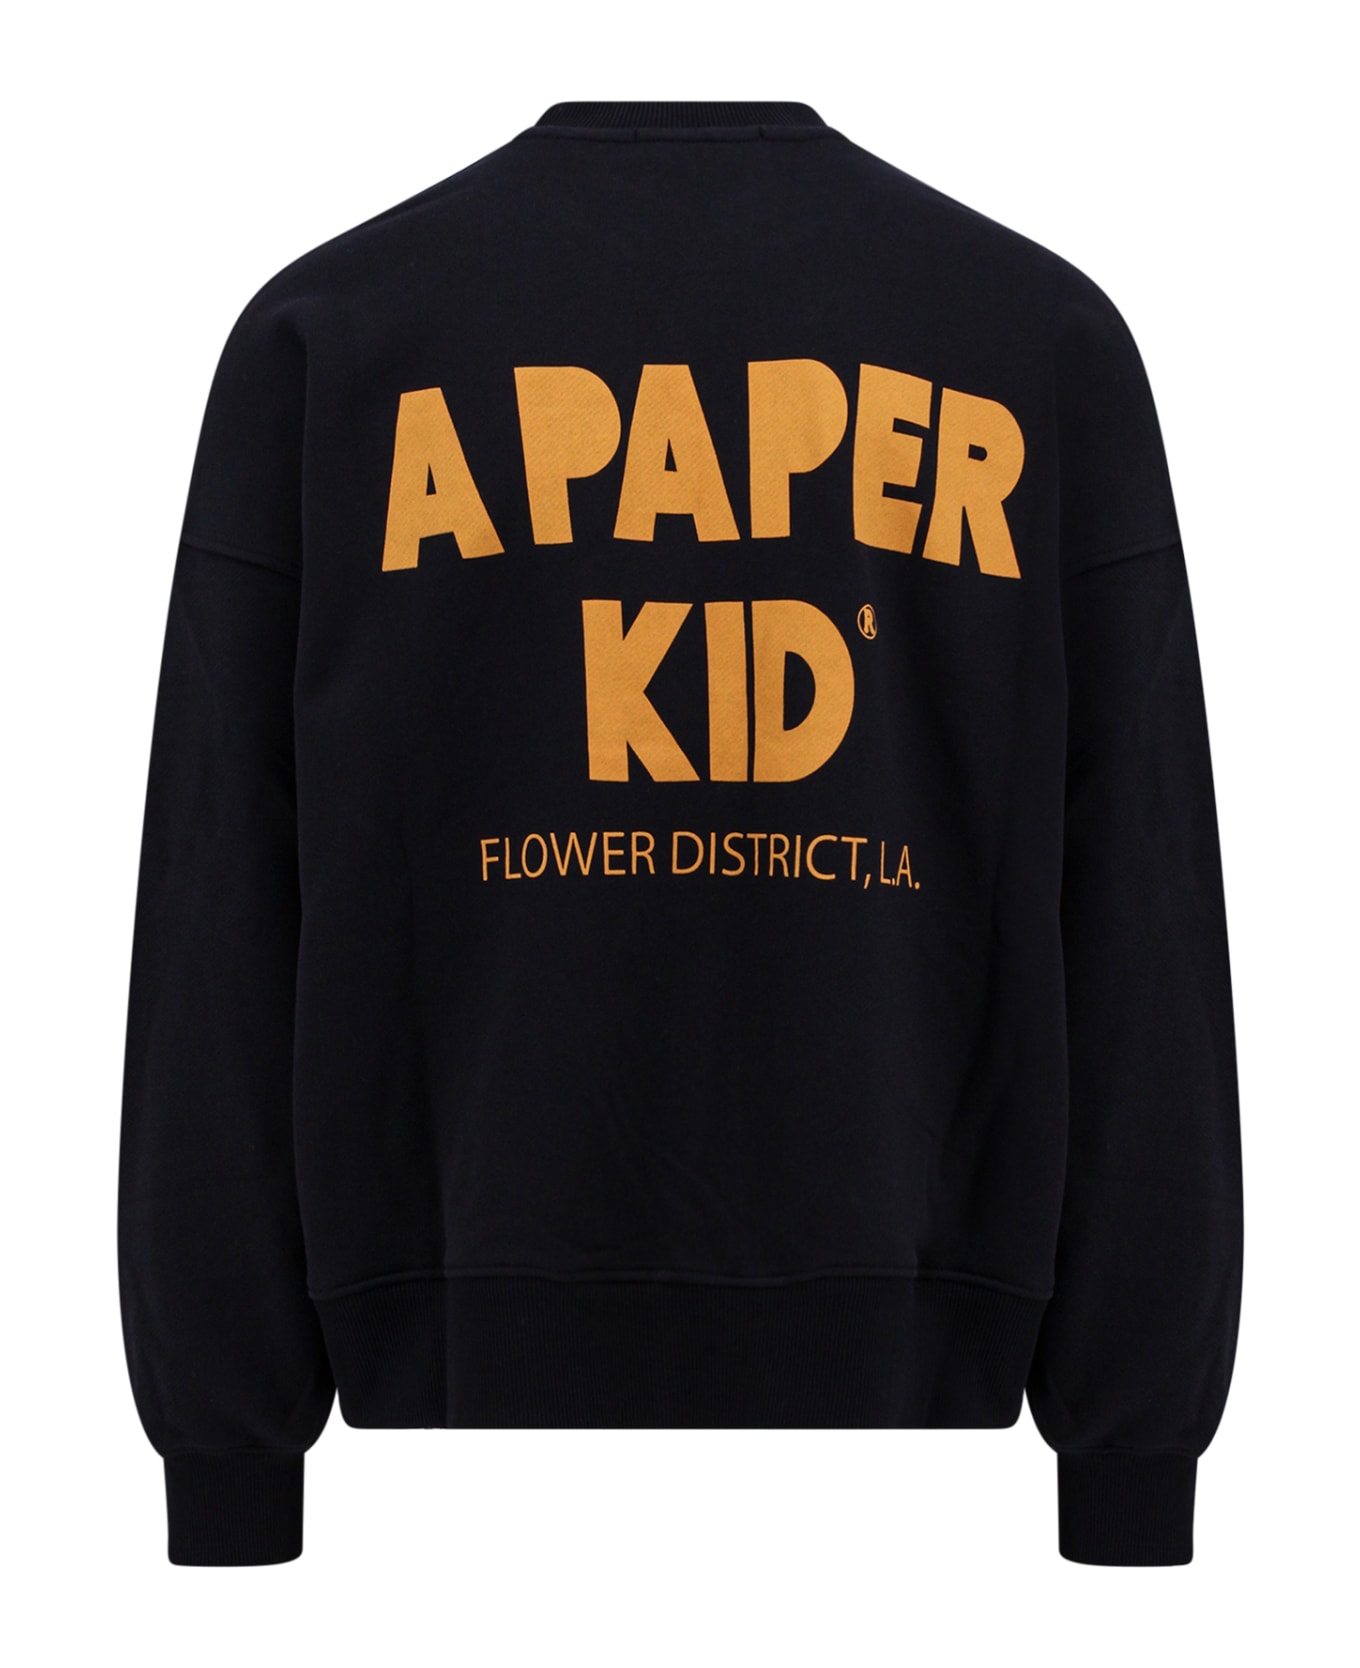 A Paper Kid Sweatshirt - Black